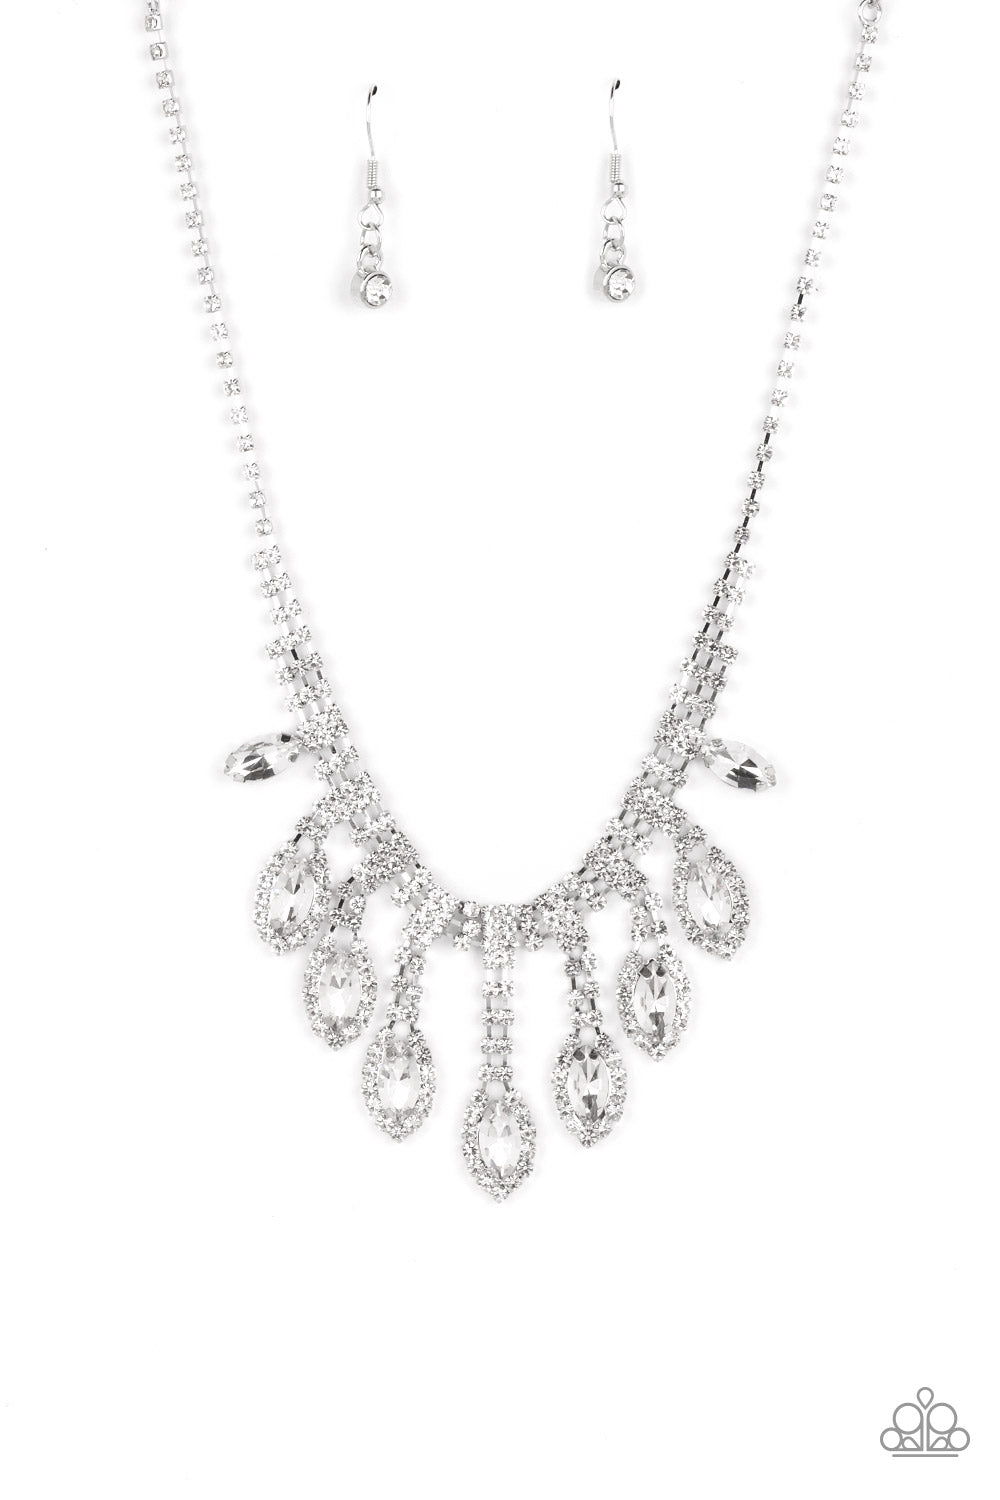 REIGNING Romance - White Rhinestone Silver Necklace